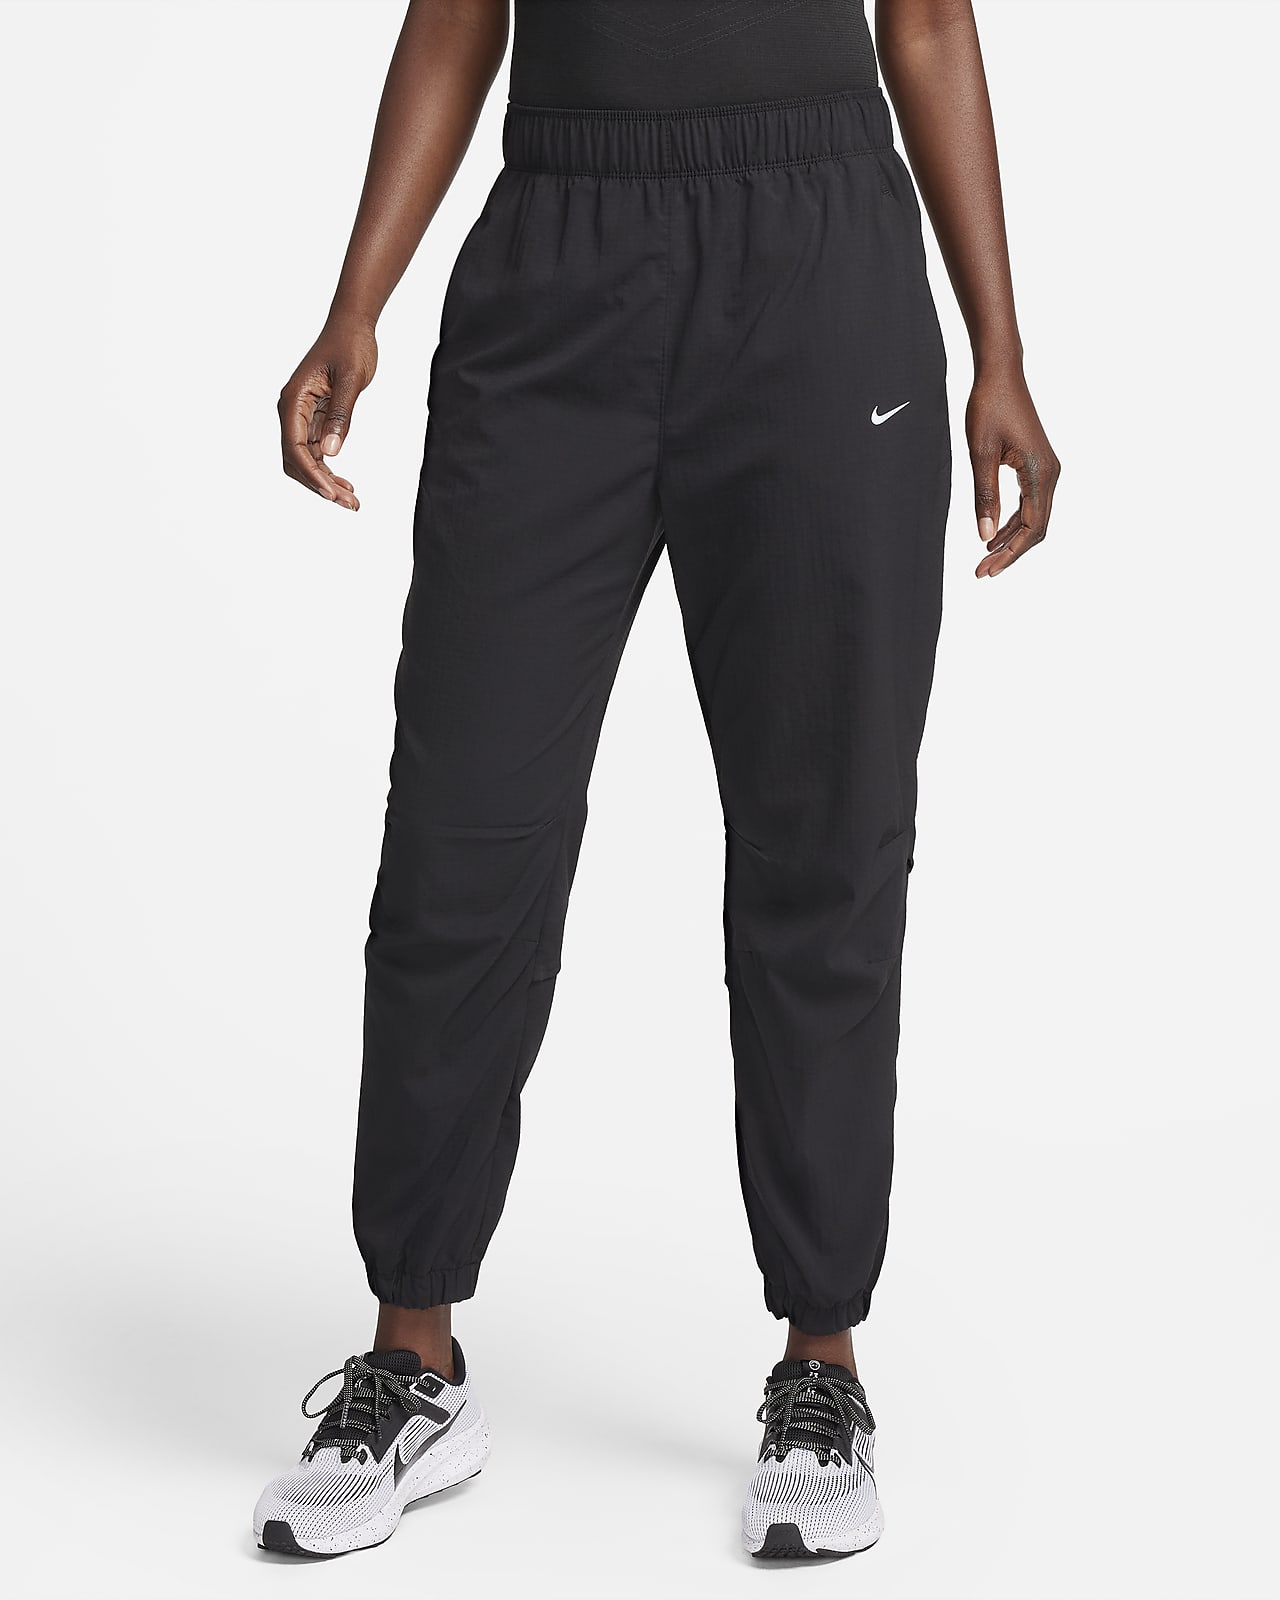 Nike Dri-FIT Fast 7/8-hardloopbroek met halfhoge taille voor warming-up voor dames